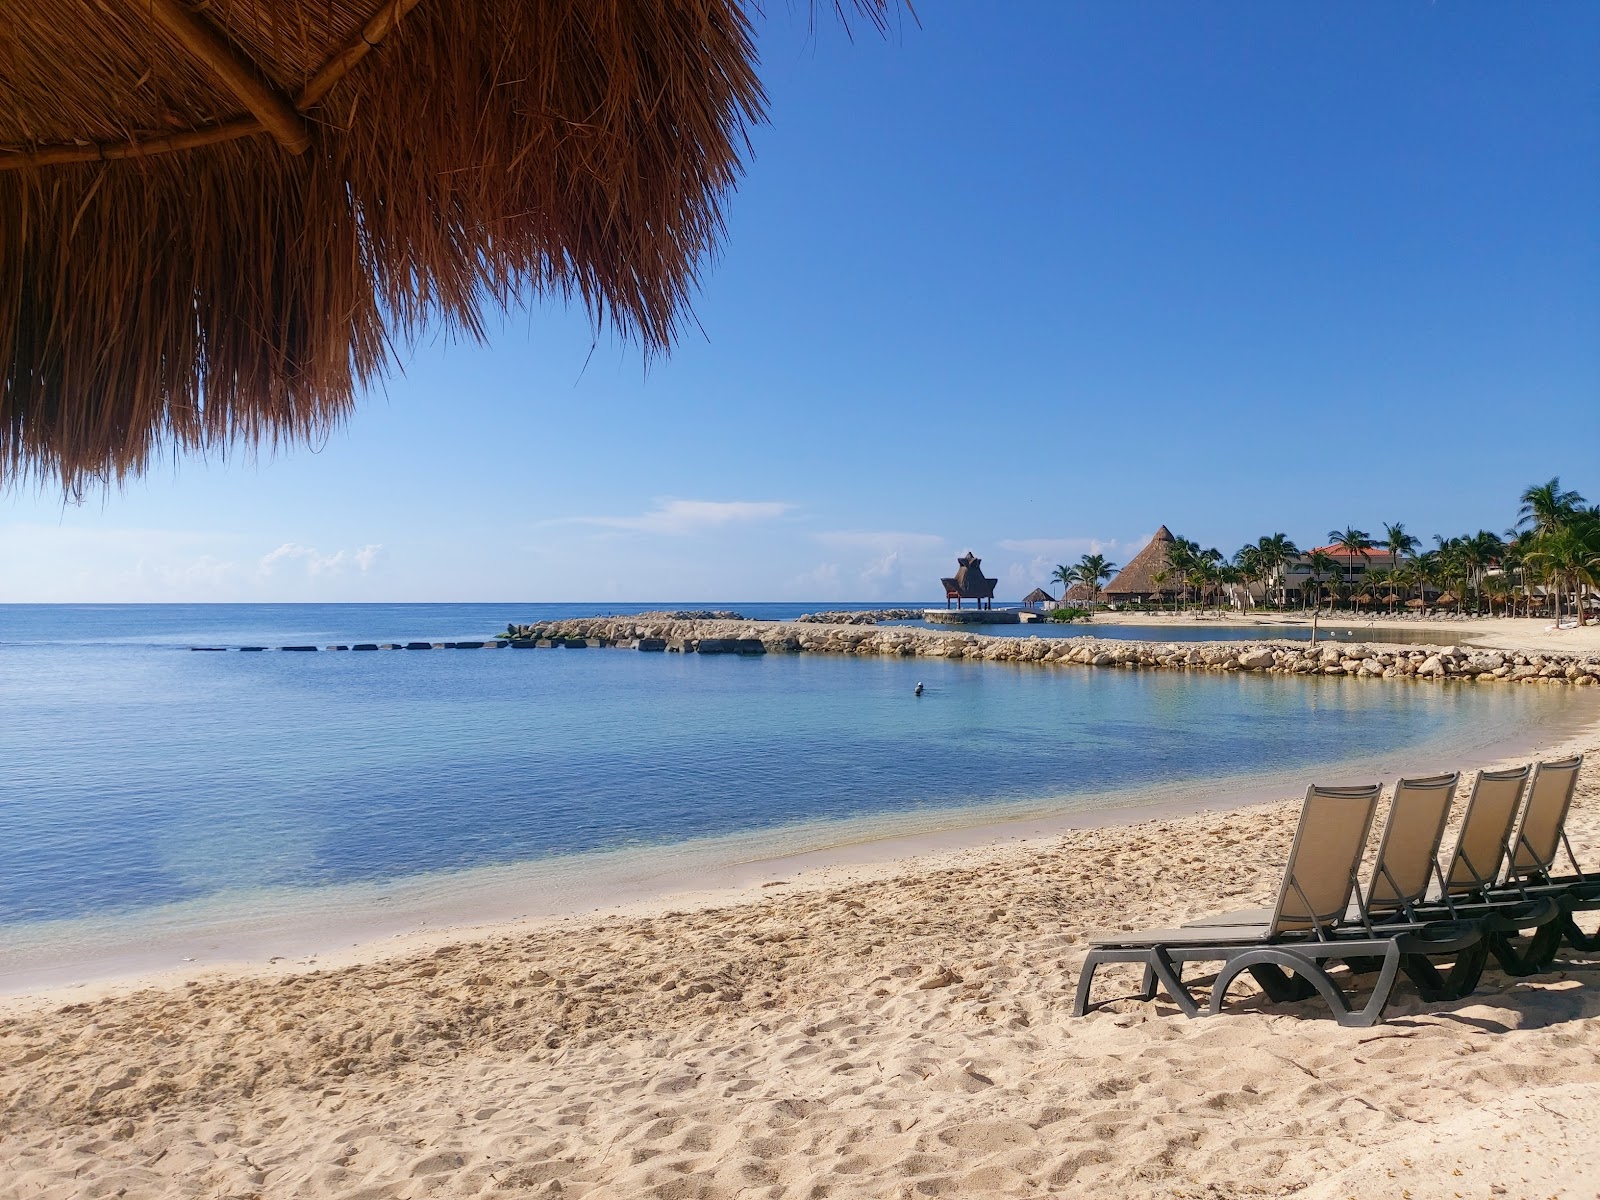 Foto de Catalonia Yucatan beach com alto nível de limpeza